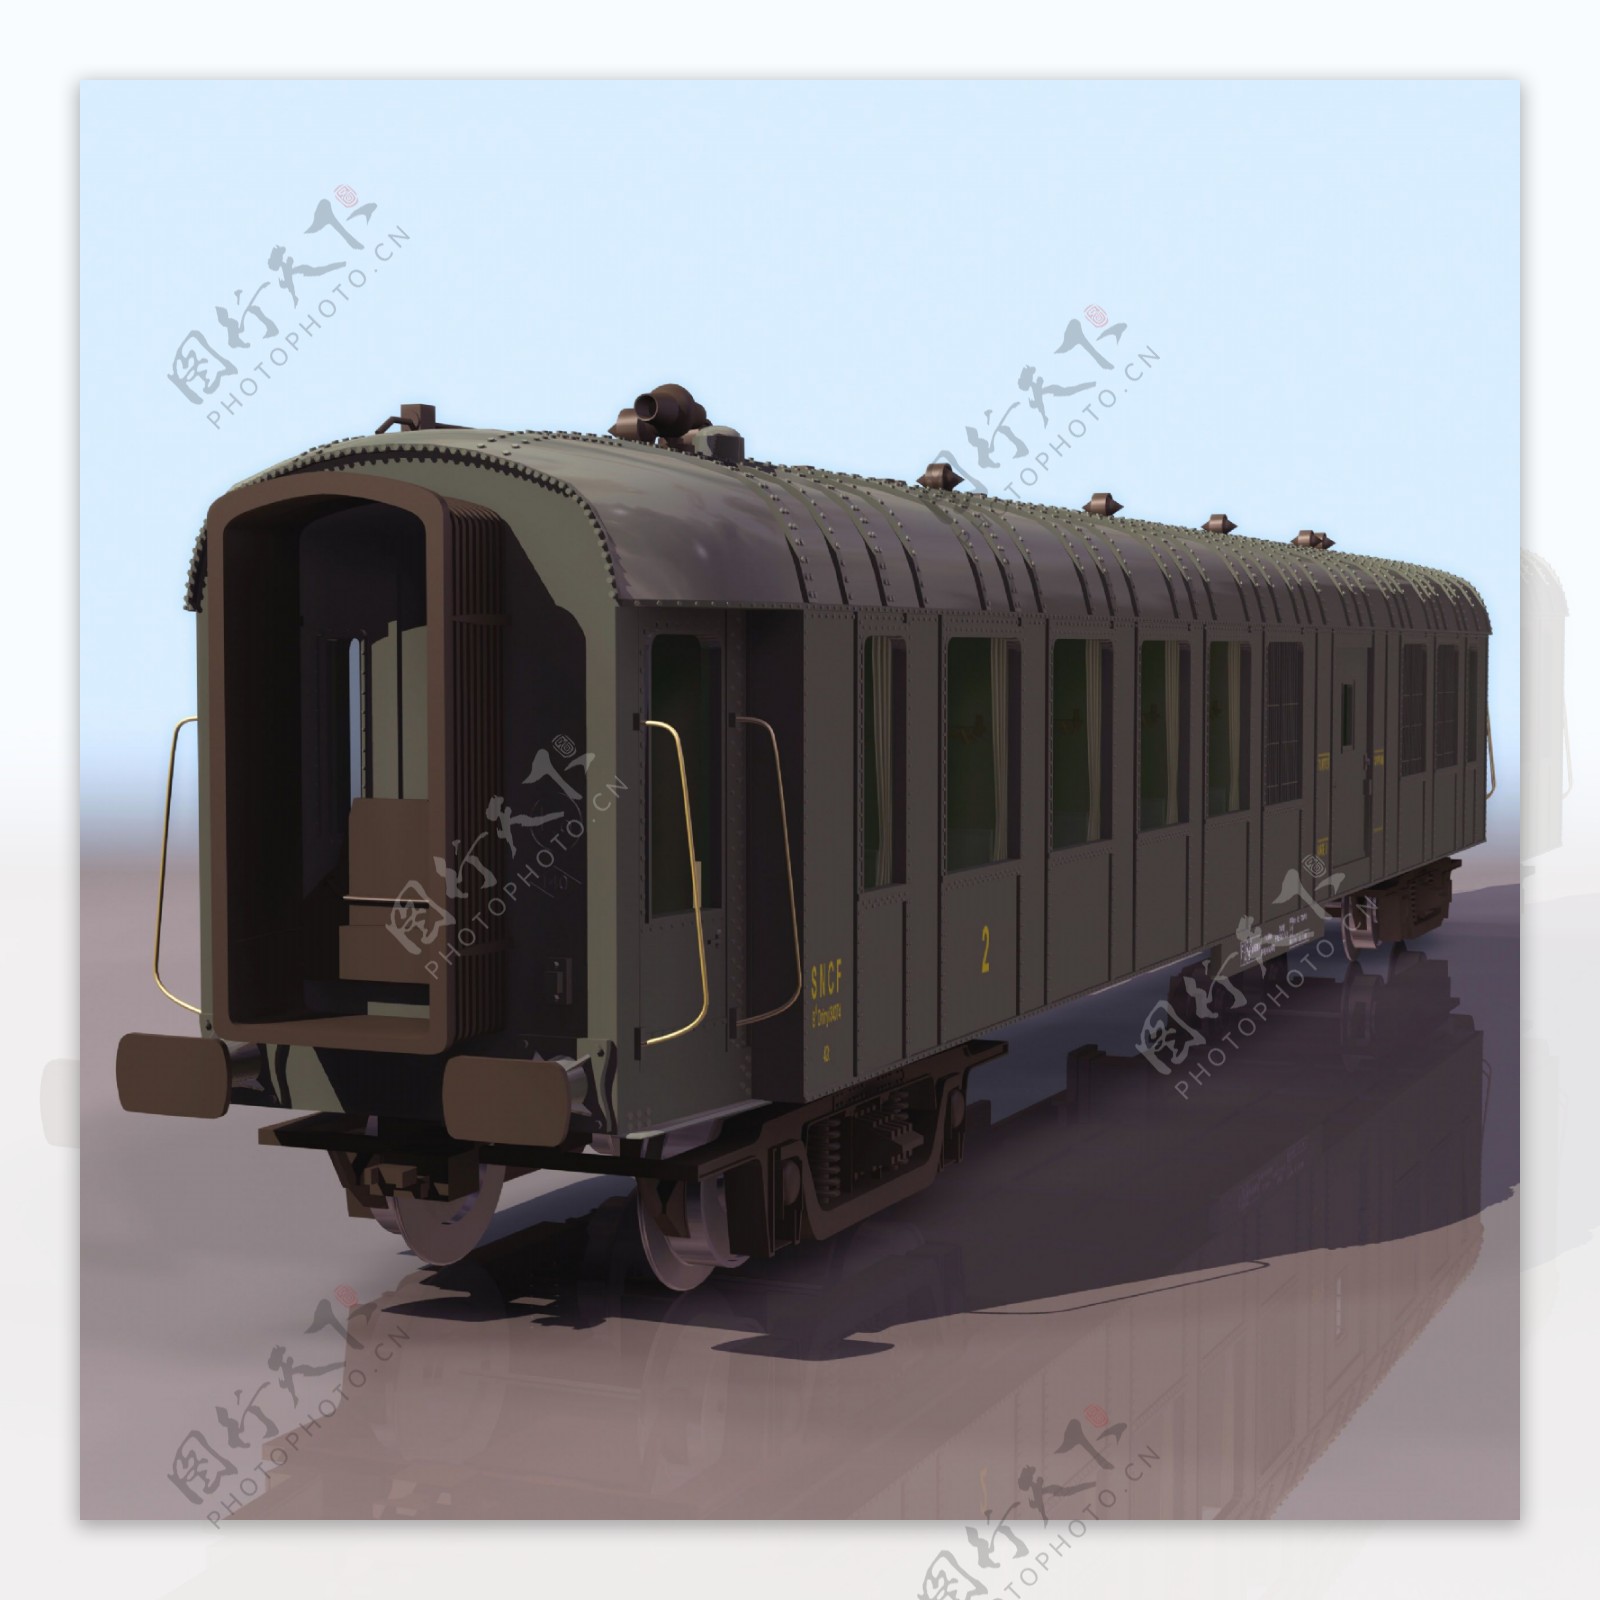 GOODSVAN火车模型05